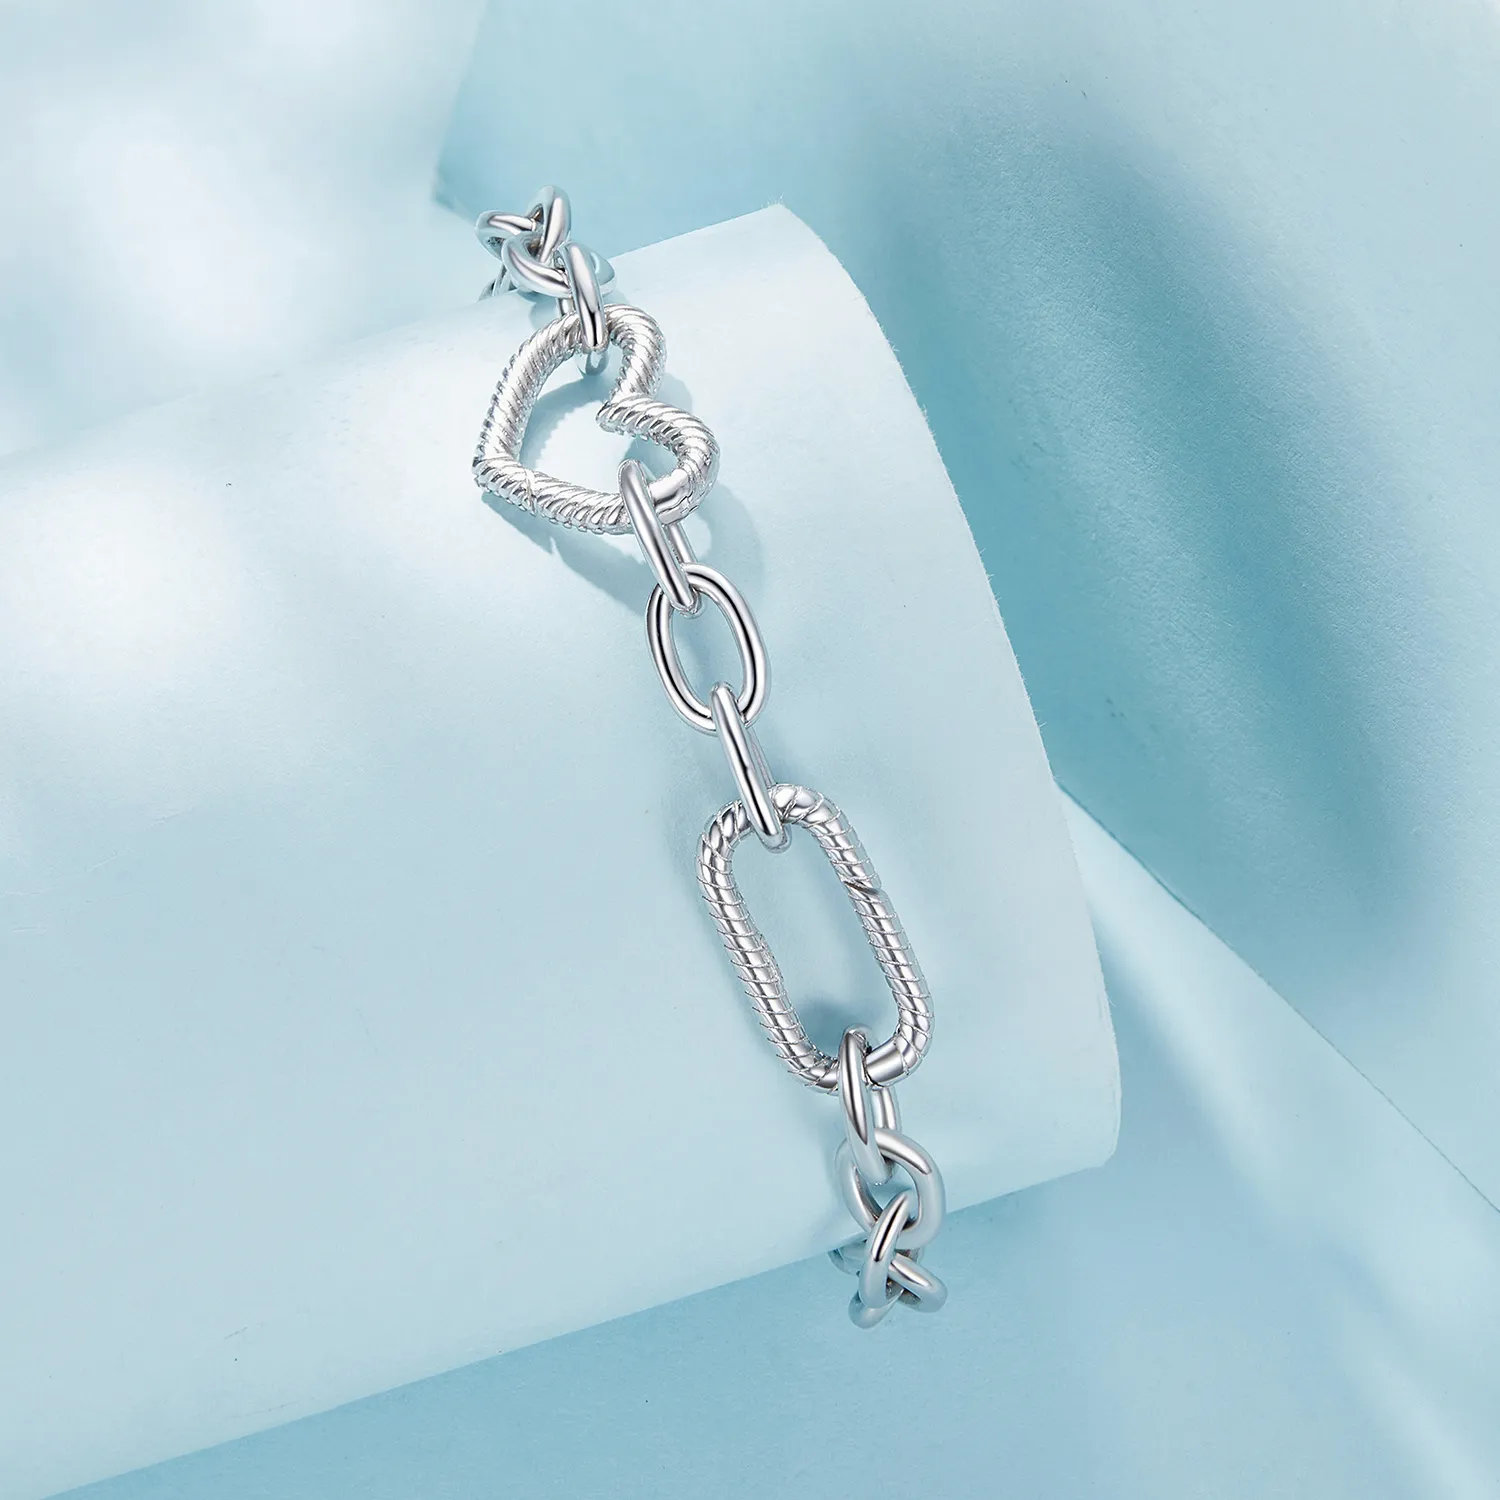 Pandora Style Heart Chain Bracelet - SCB258